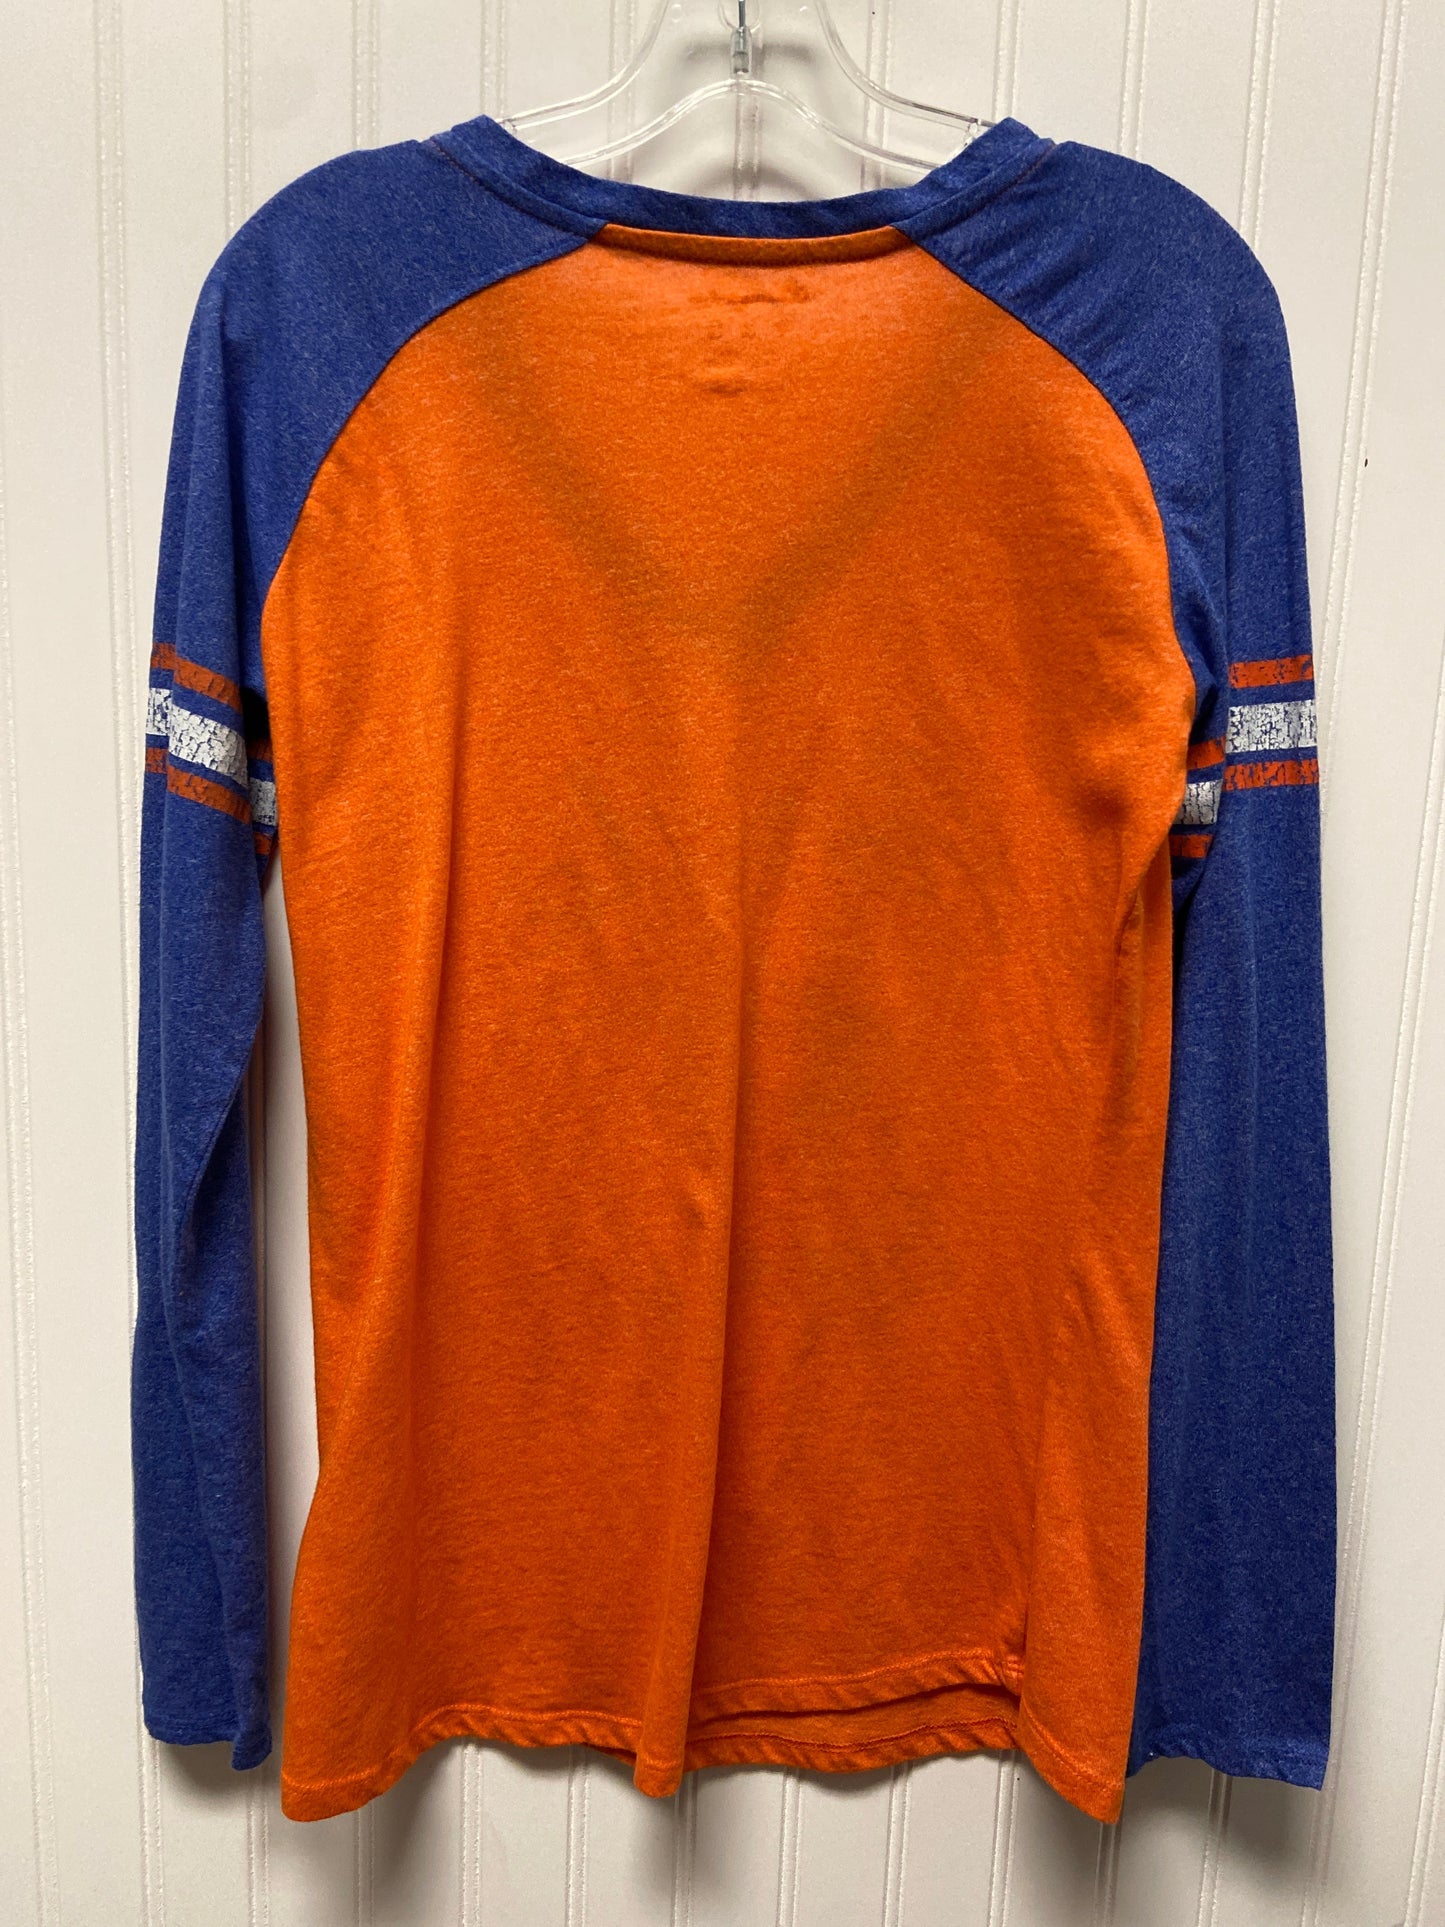 Blue & Orange Athletic Top Long Sleeve Crewneck Champion, Size L